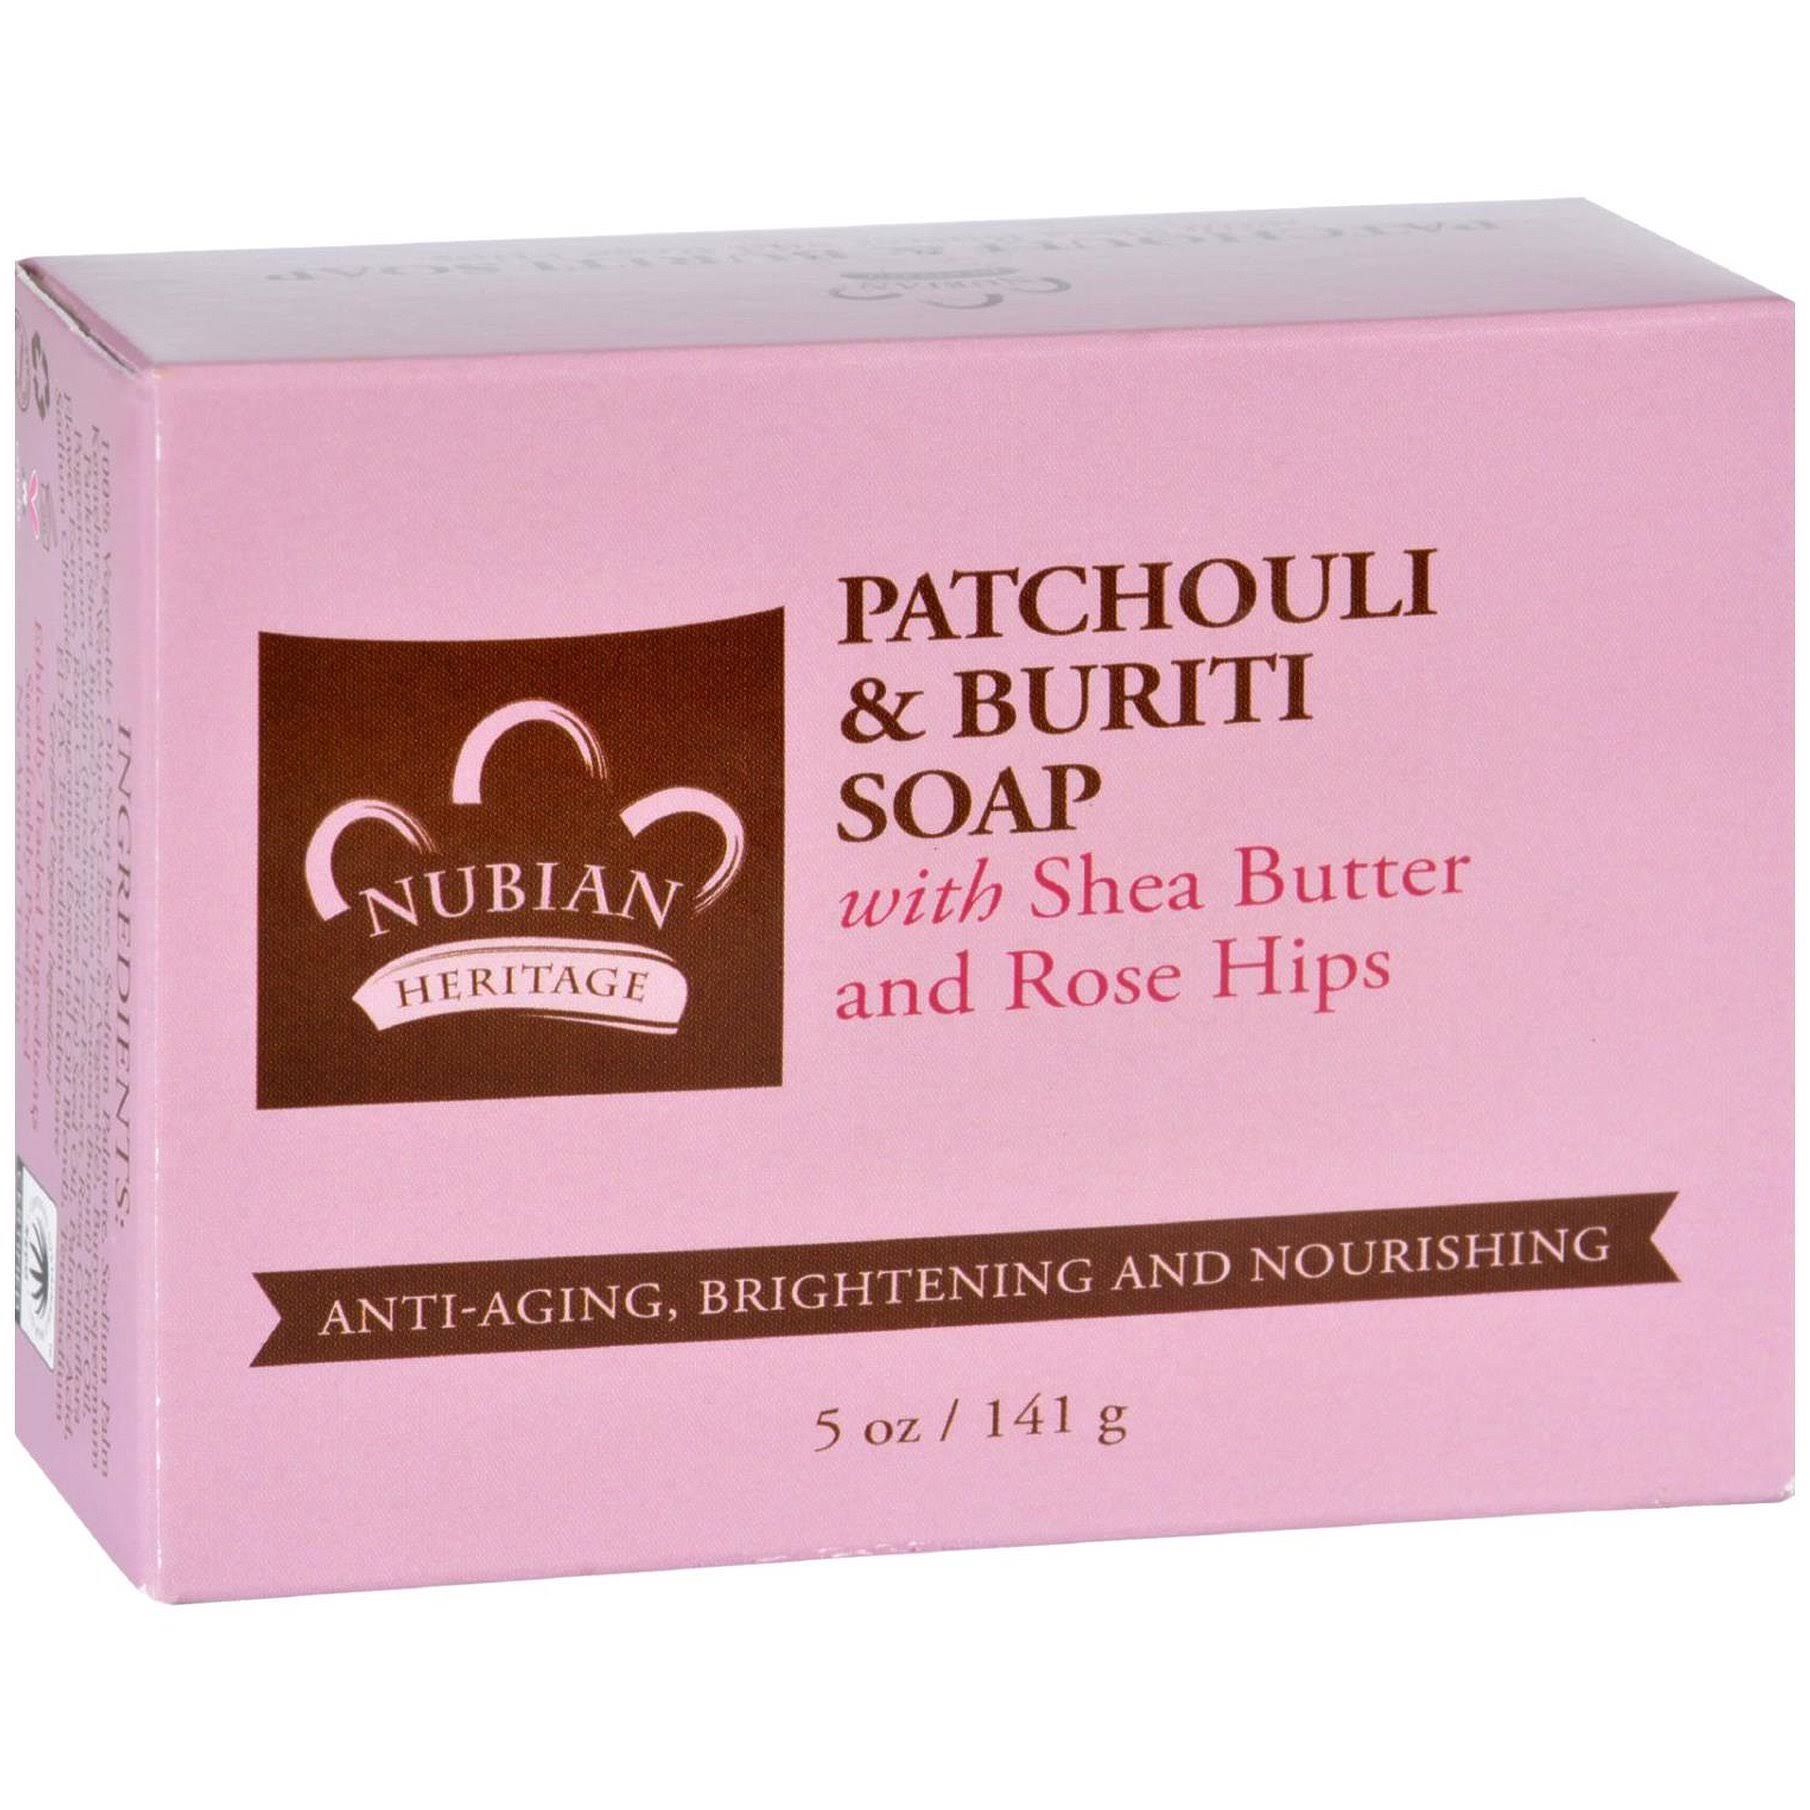 Nubian Heritage Bar Soap - Patchouli and Buriti, 5oz